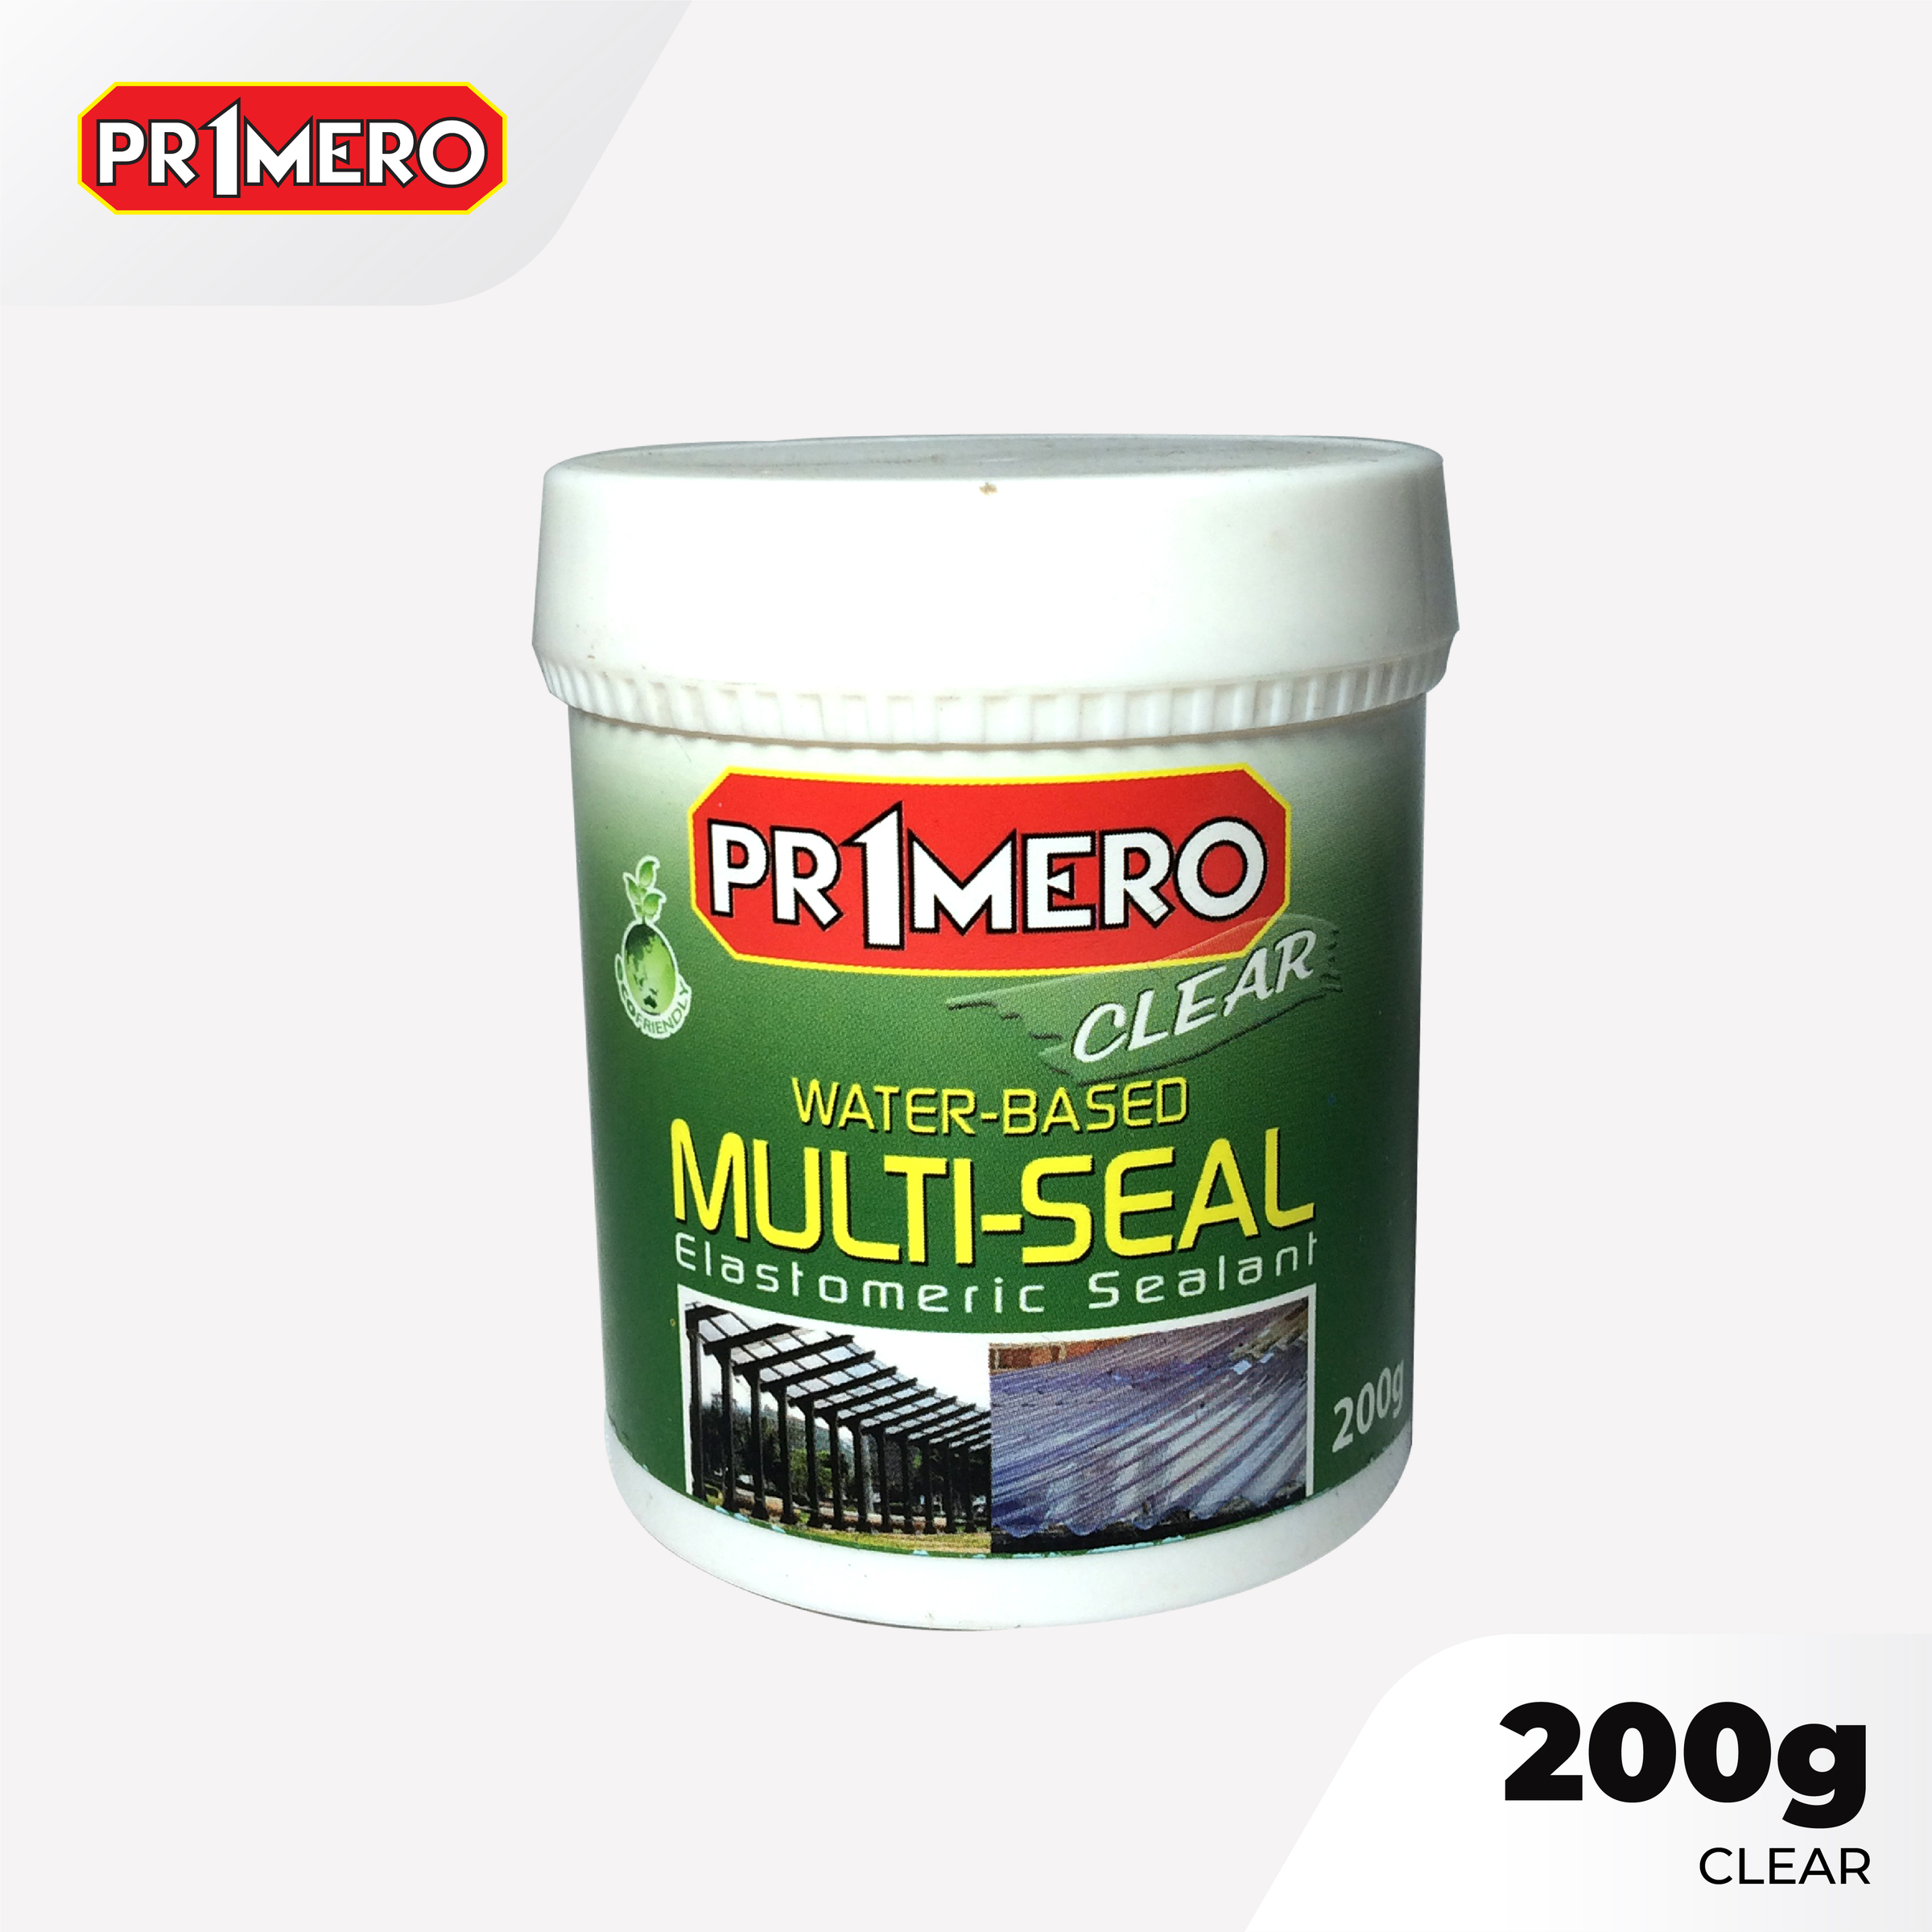 Primero Multi-Seal Elastomeric Waterproofing Sealant Clear - 200g